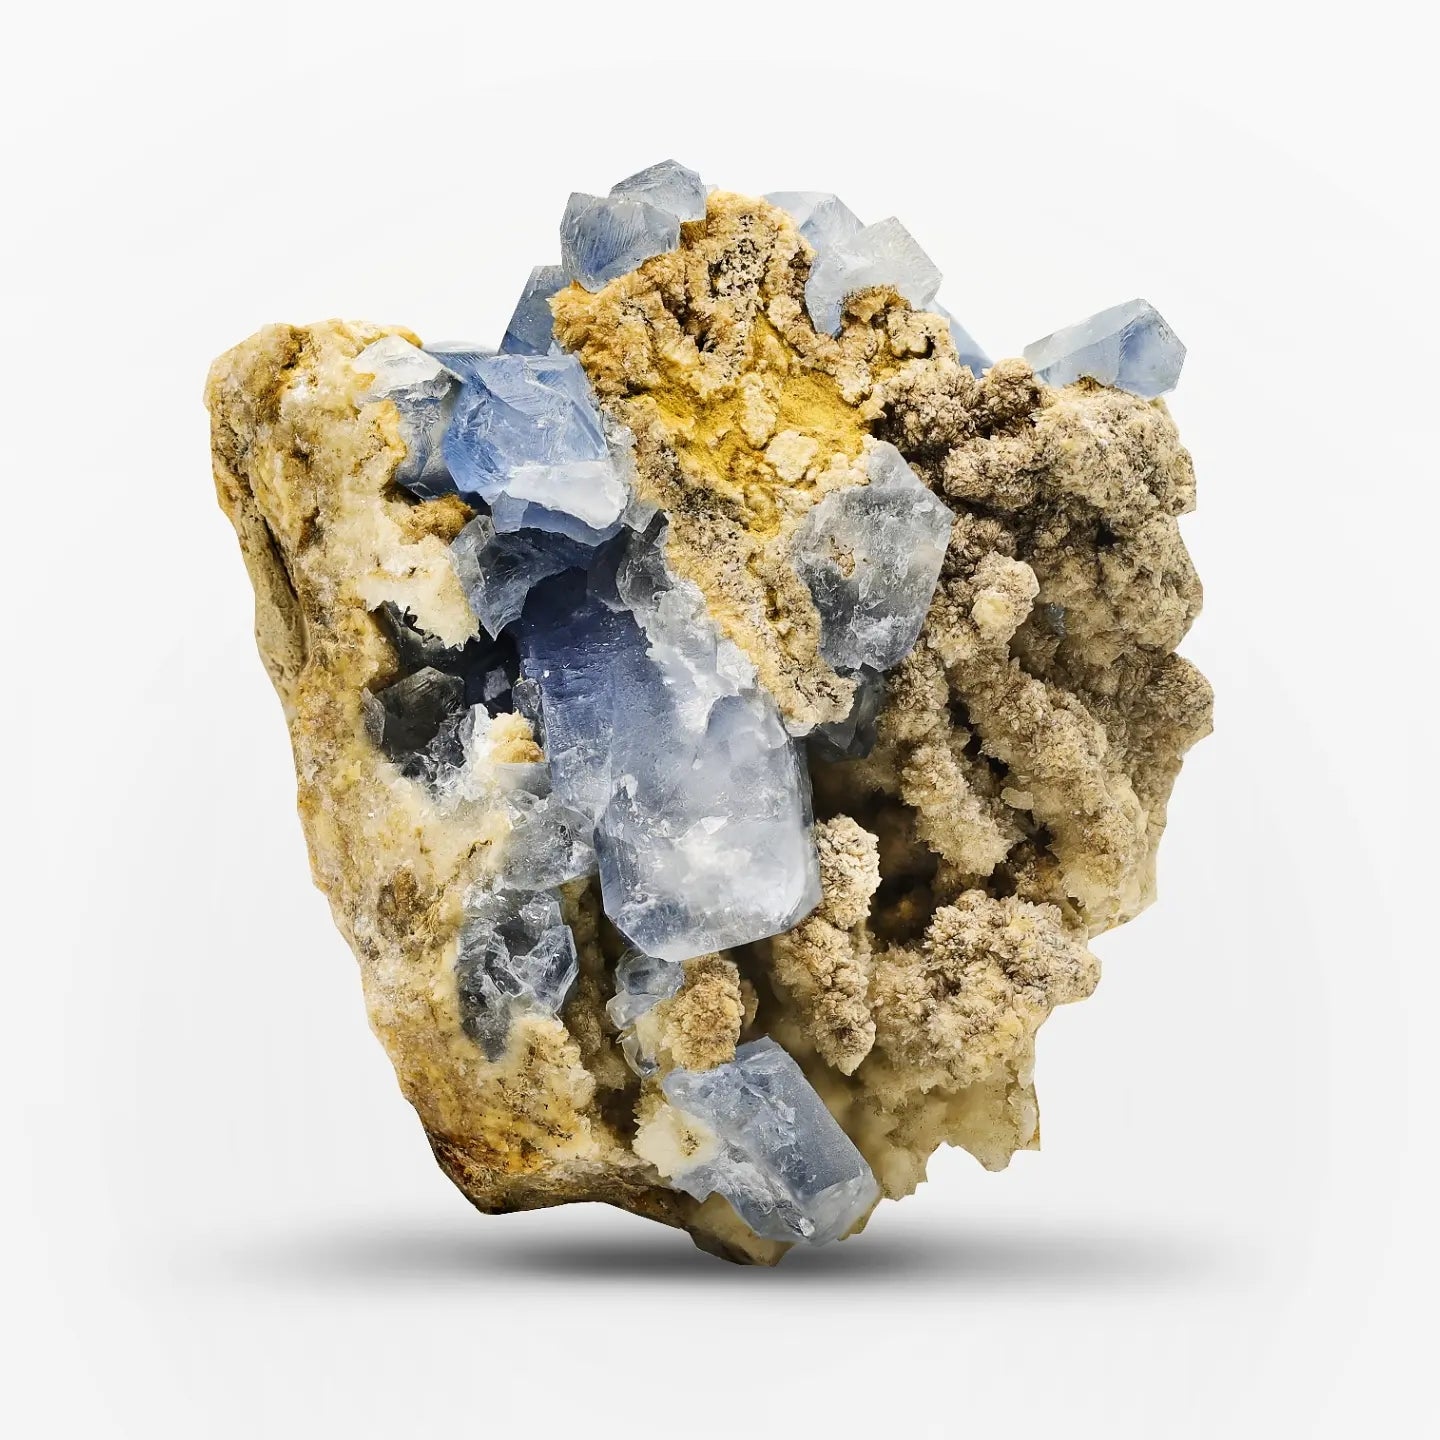  Blue Color Celestine Crystals on Calcite